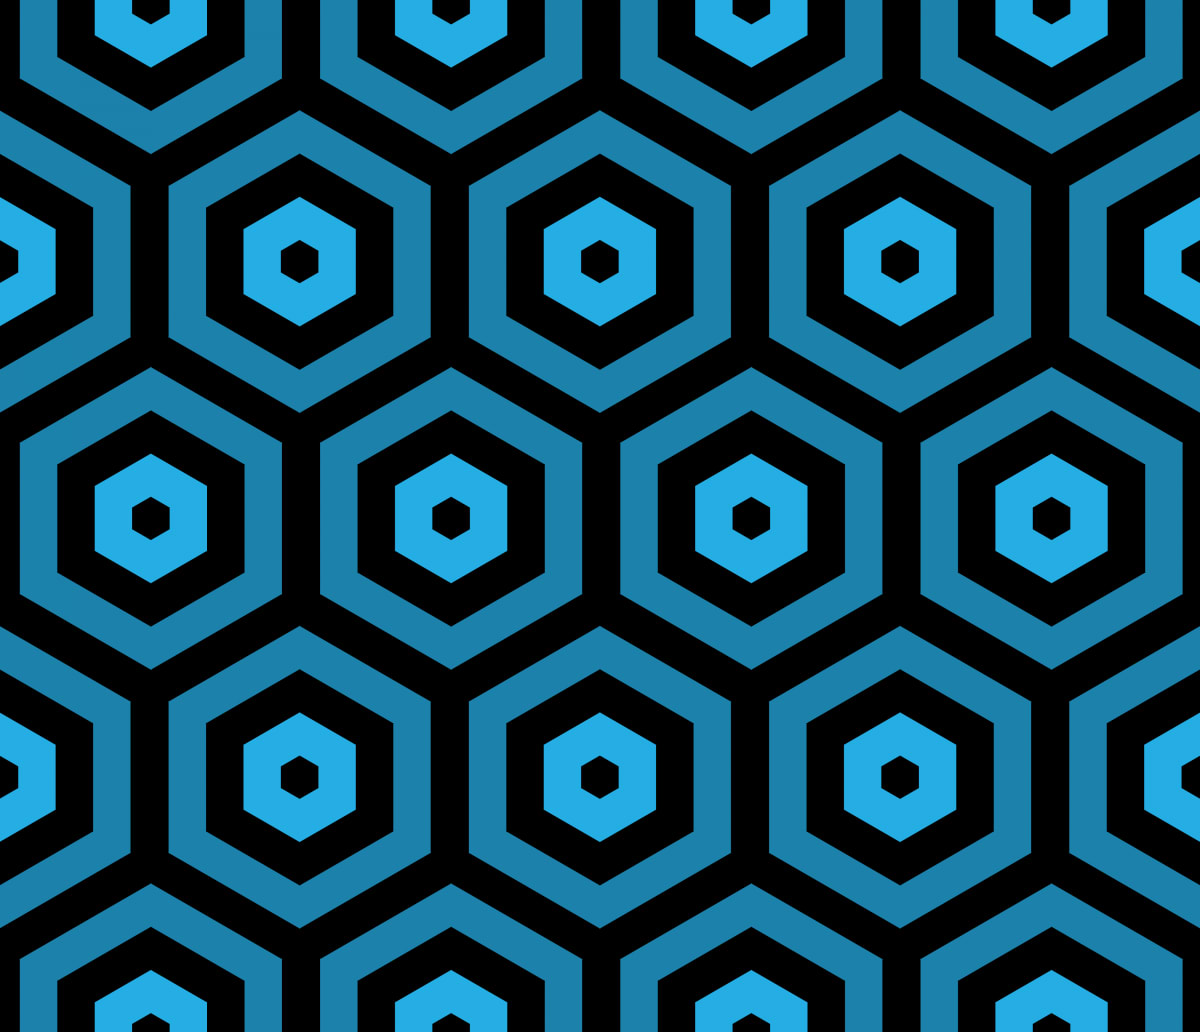 Geometric Pattern: Hexagon Hive: Dark Negative / Red Wolf